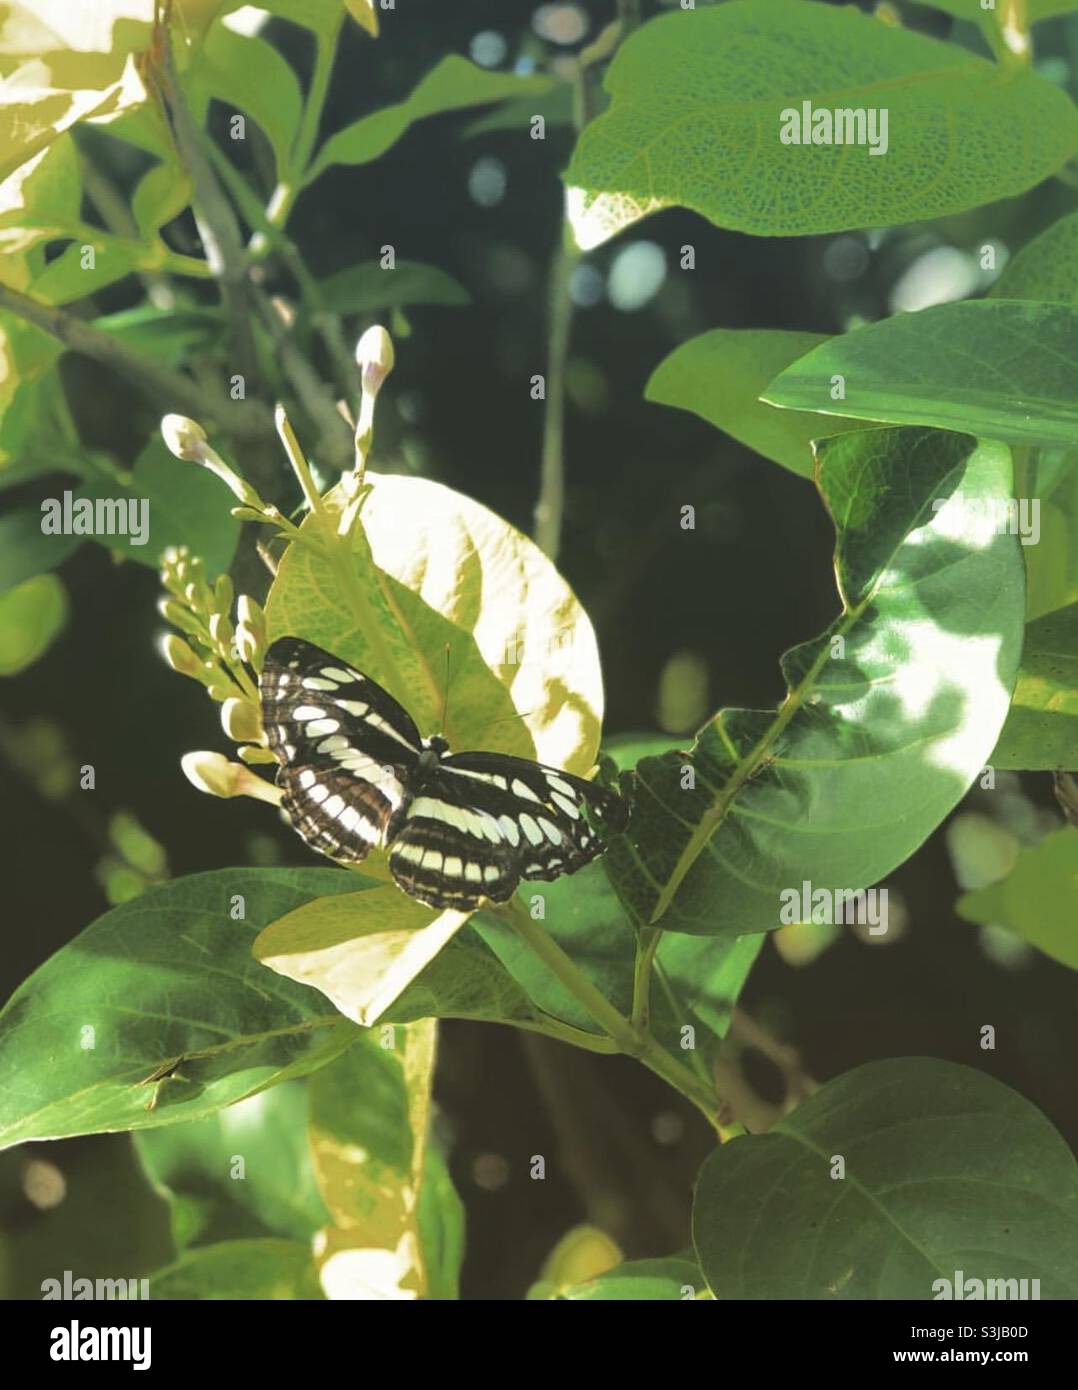 Neptis hylas butterfly on a leaf Stock Photo